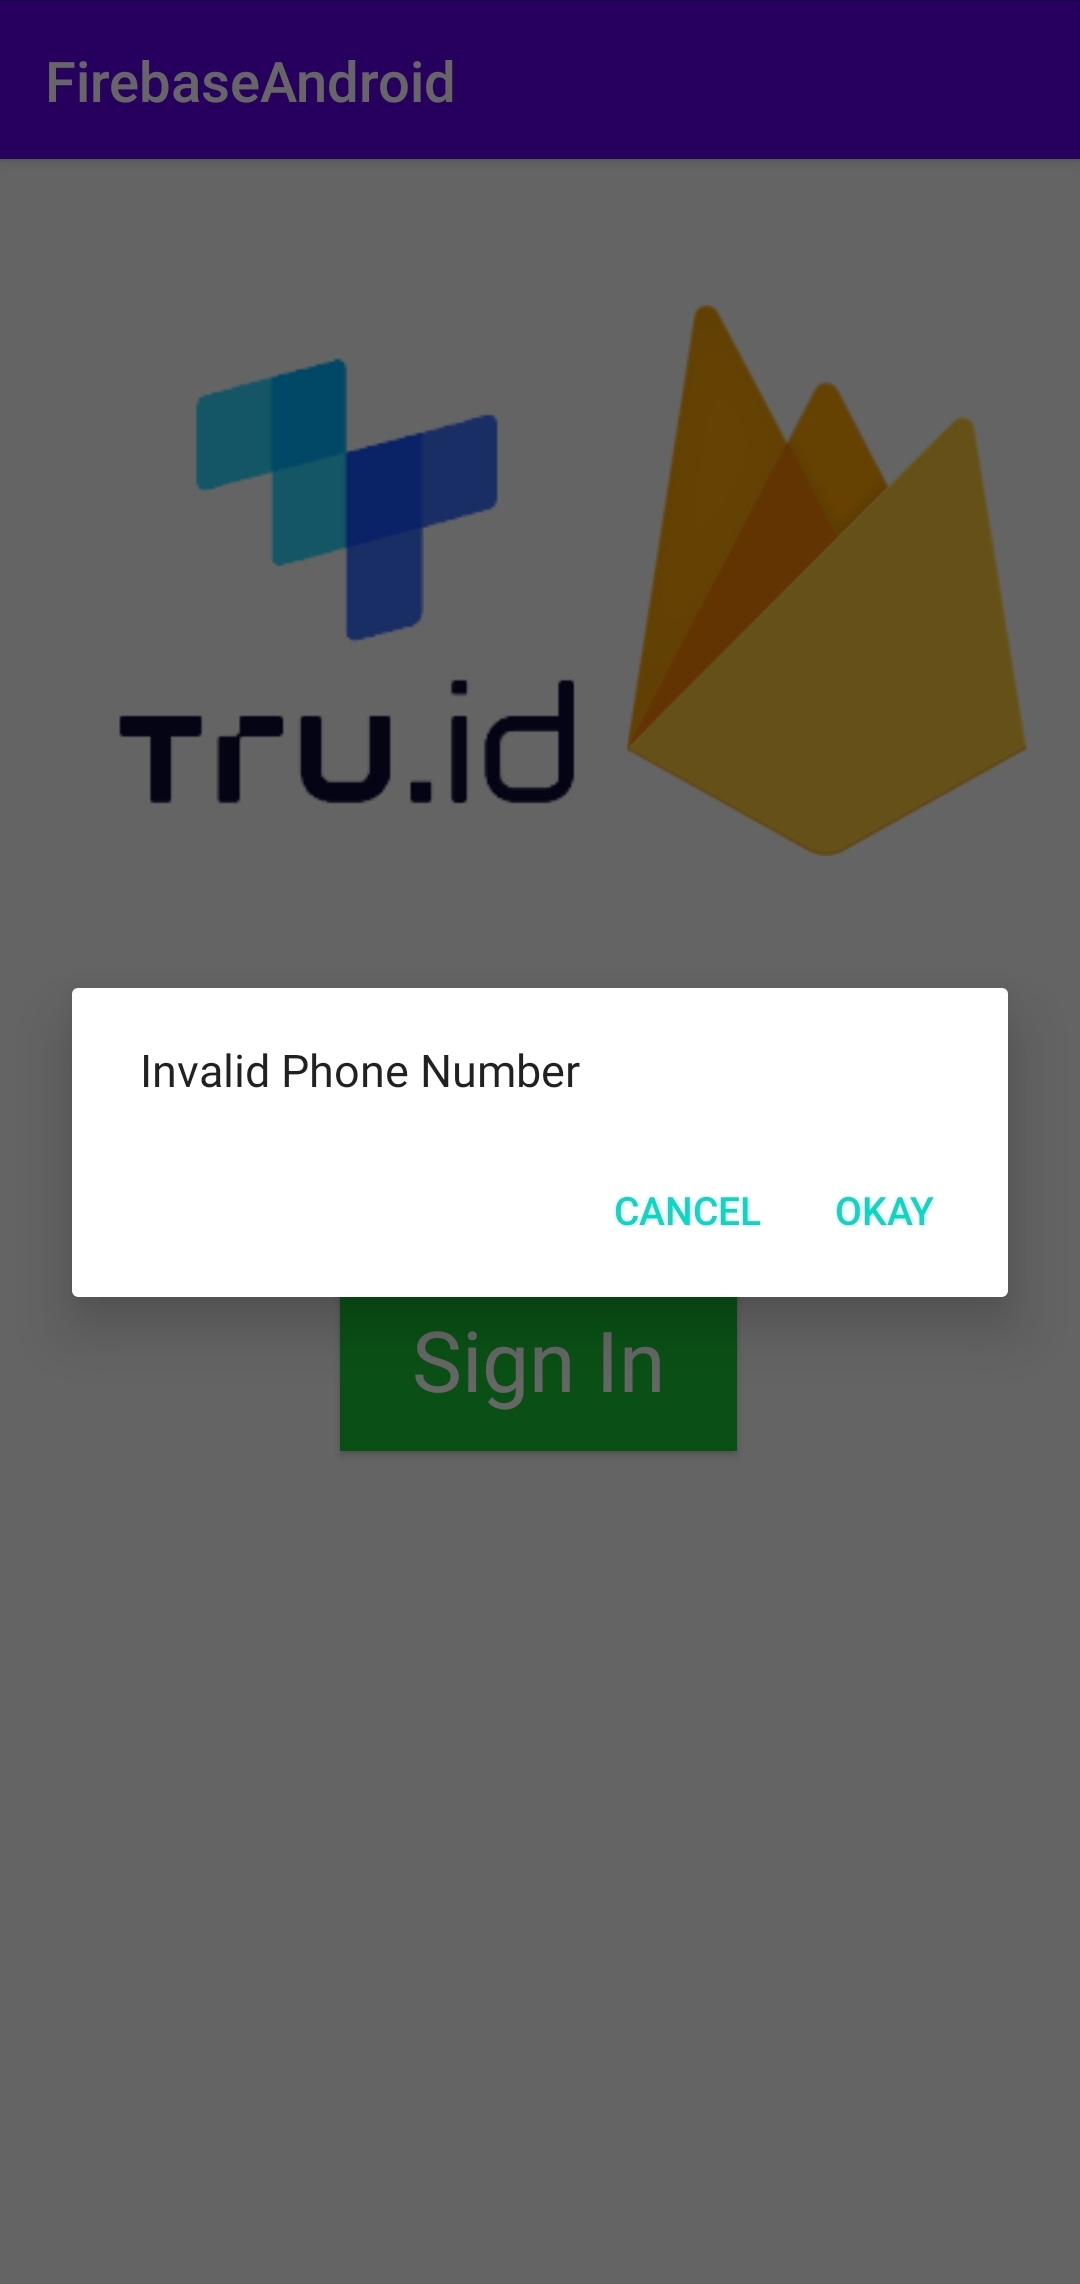 tru.ID verification successful, but Firebase Phone Auth verification failed